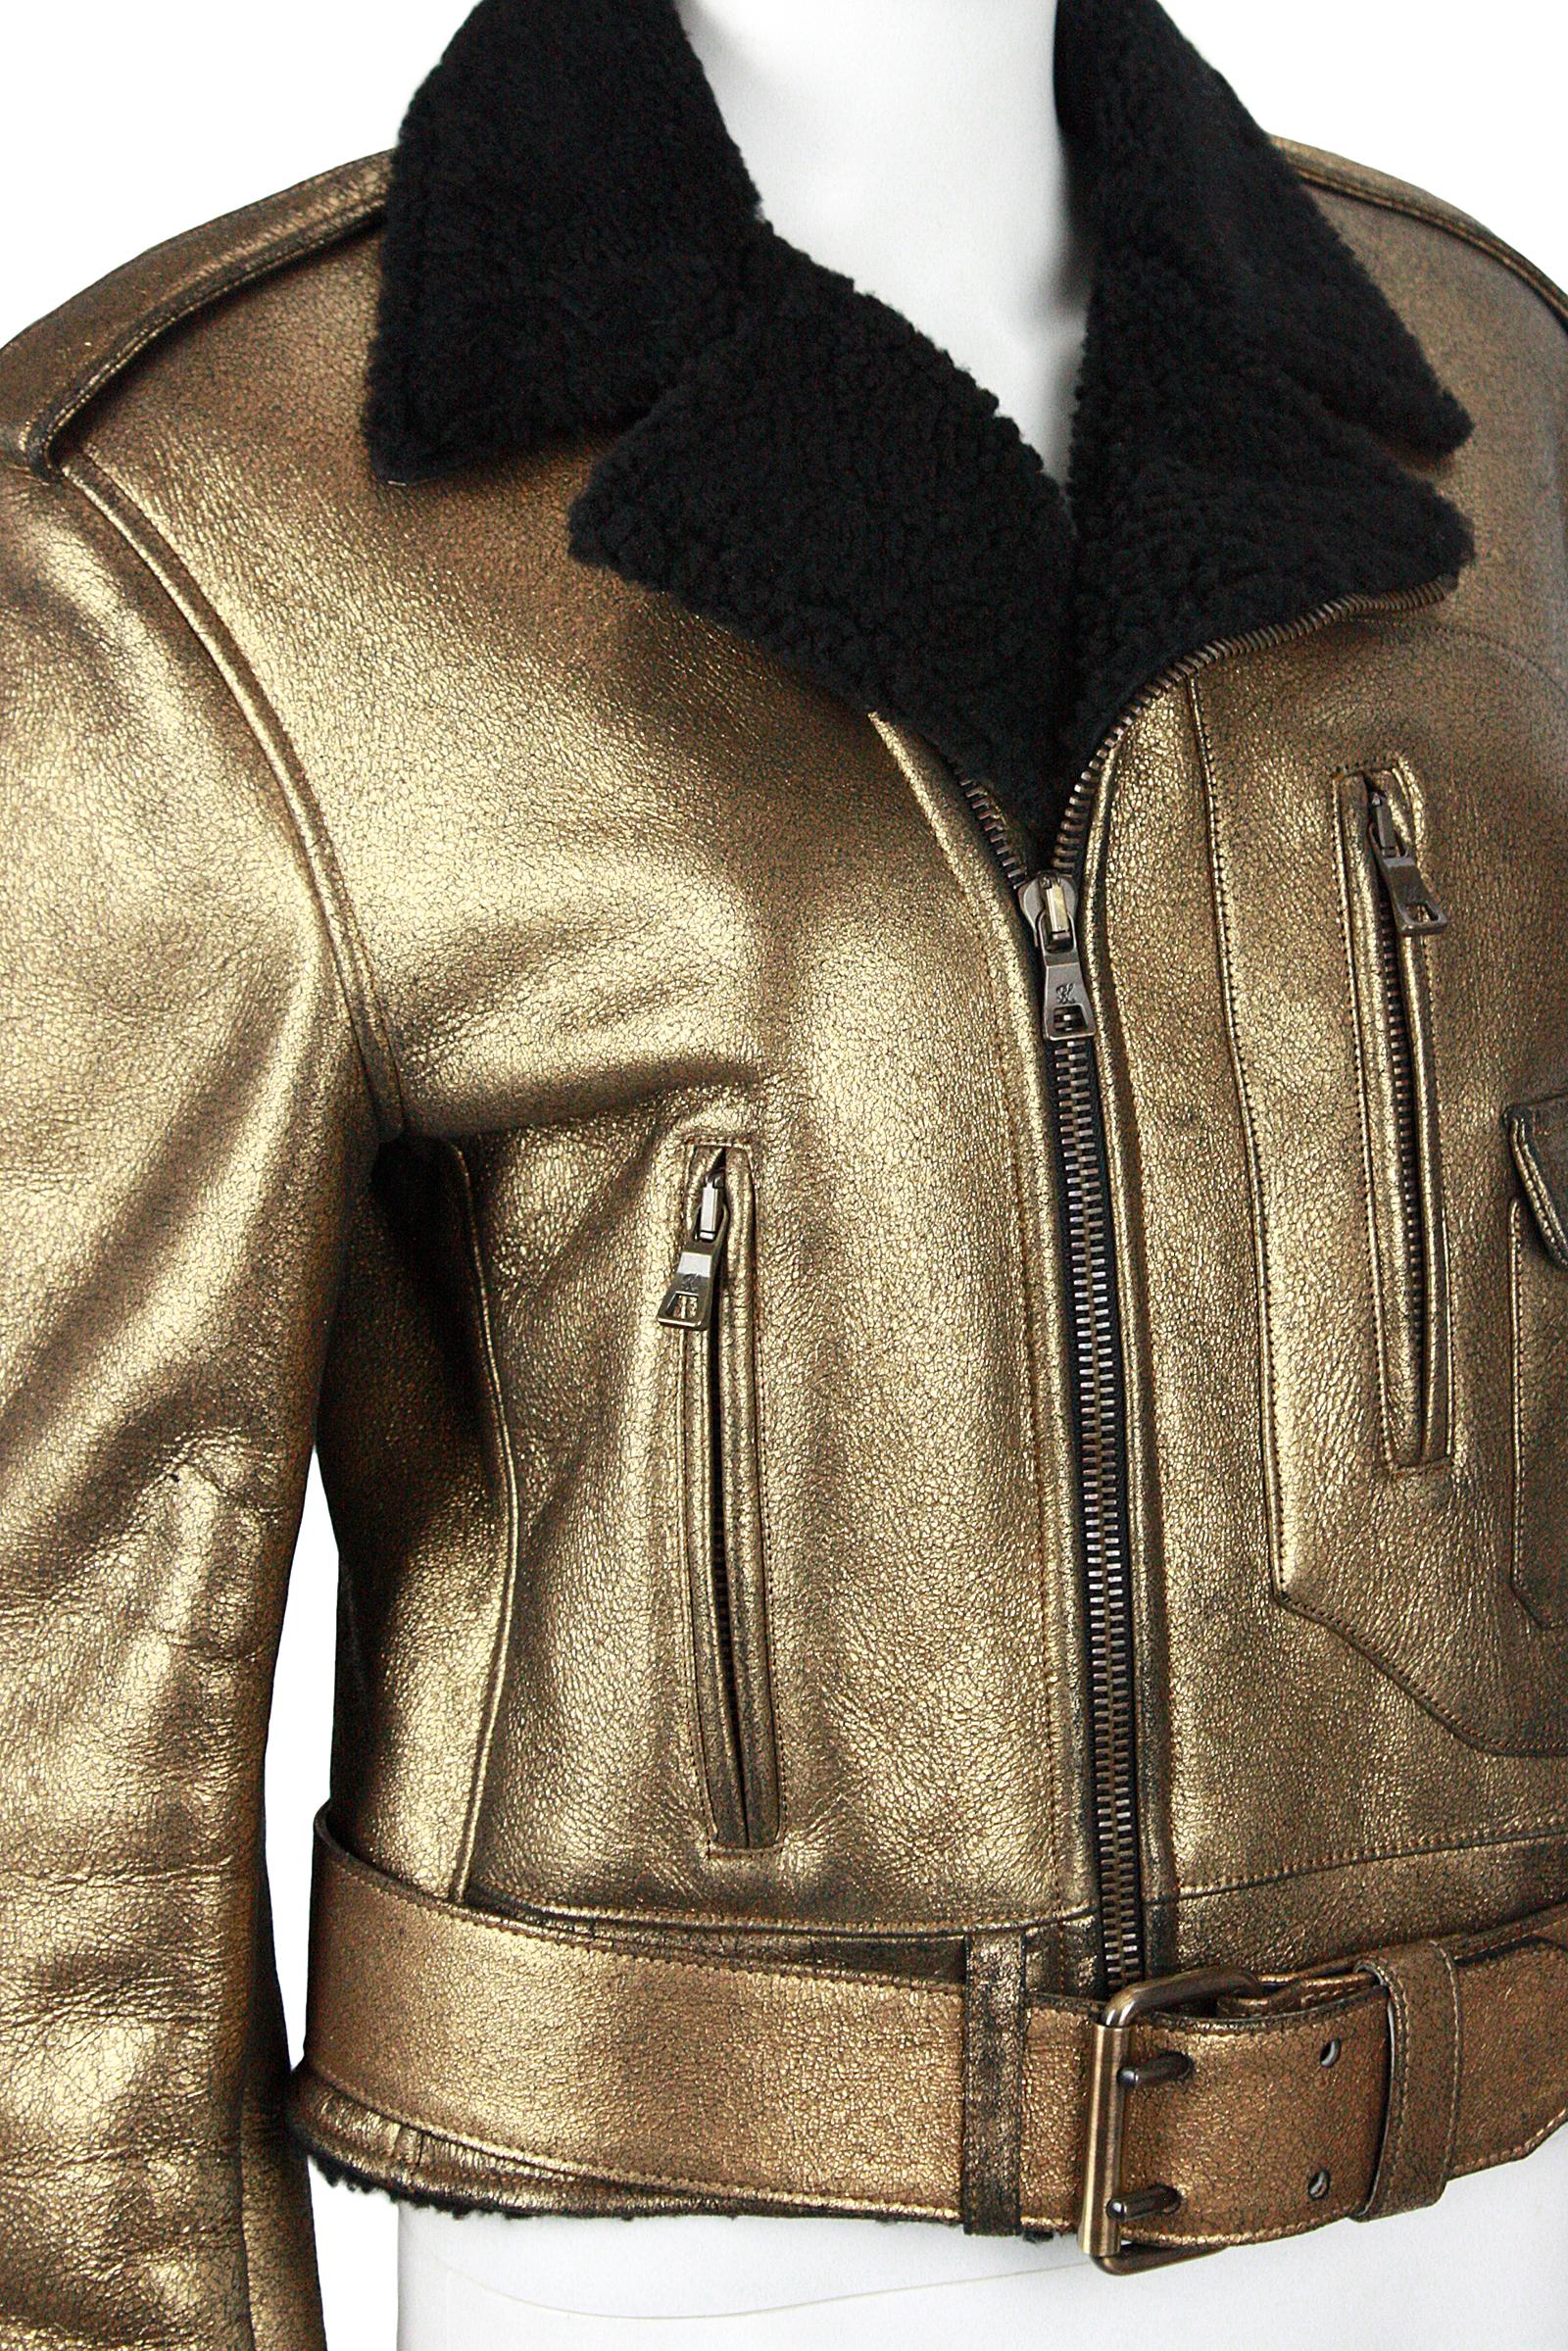 ralph lauren shearling leather jacket